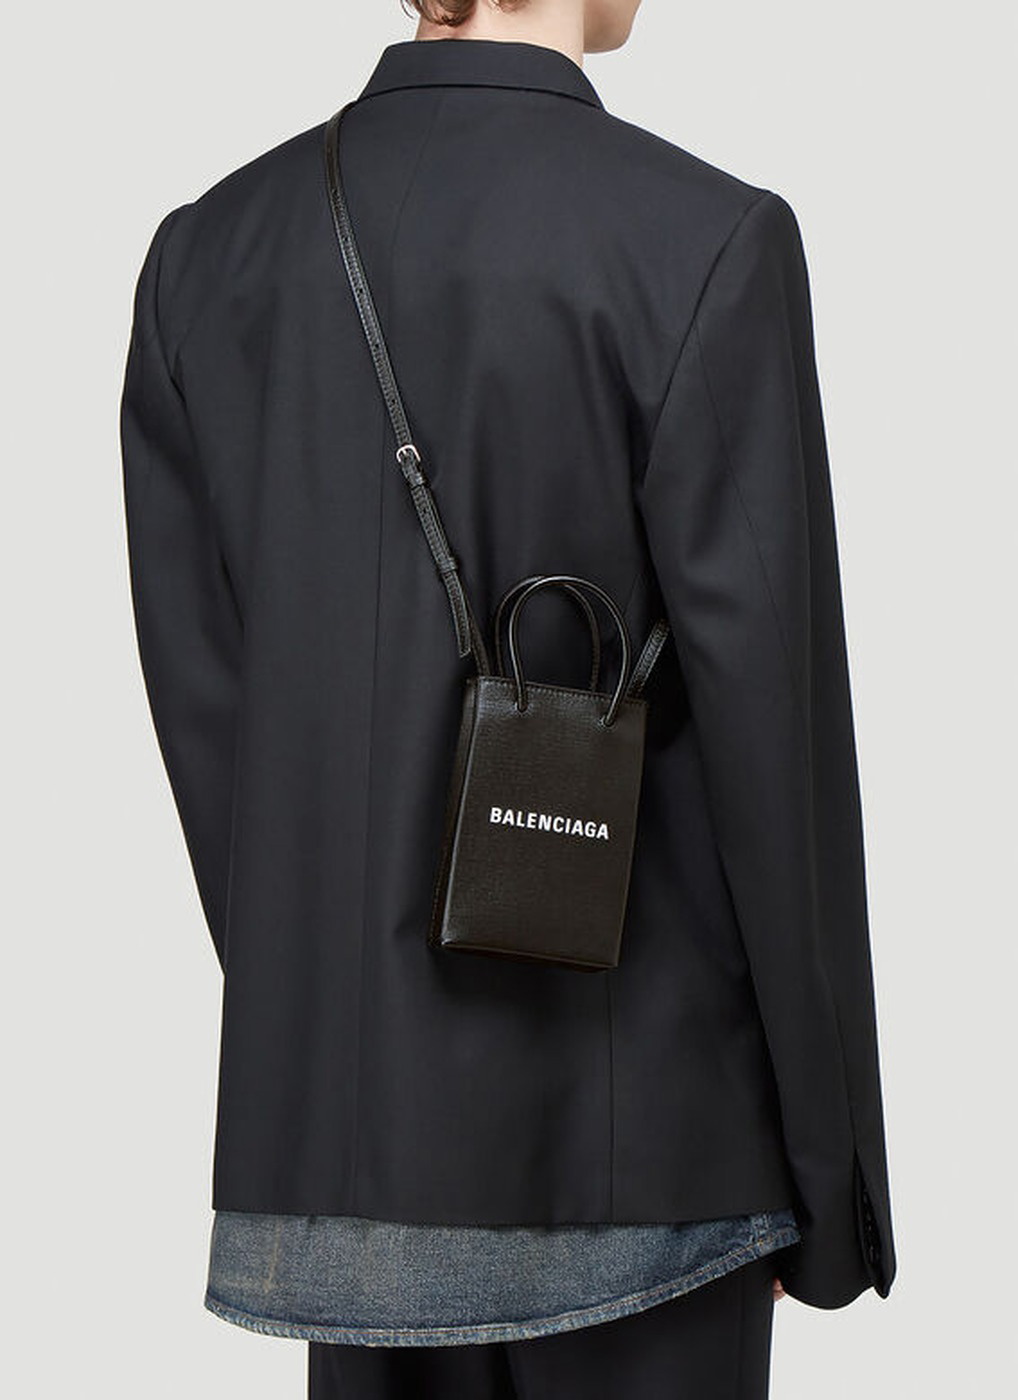 Shopping Phone Holder Bag in Black Balenciaga